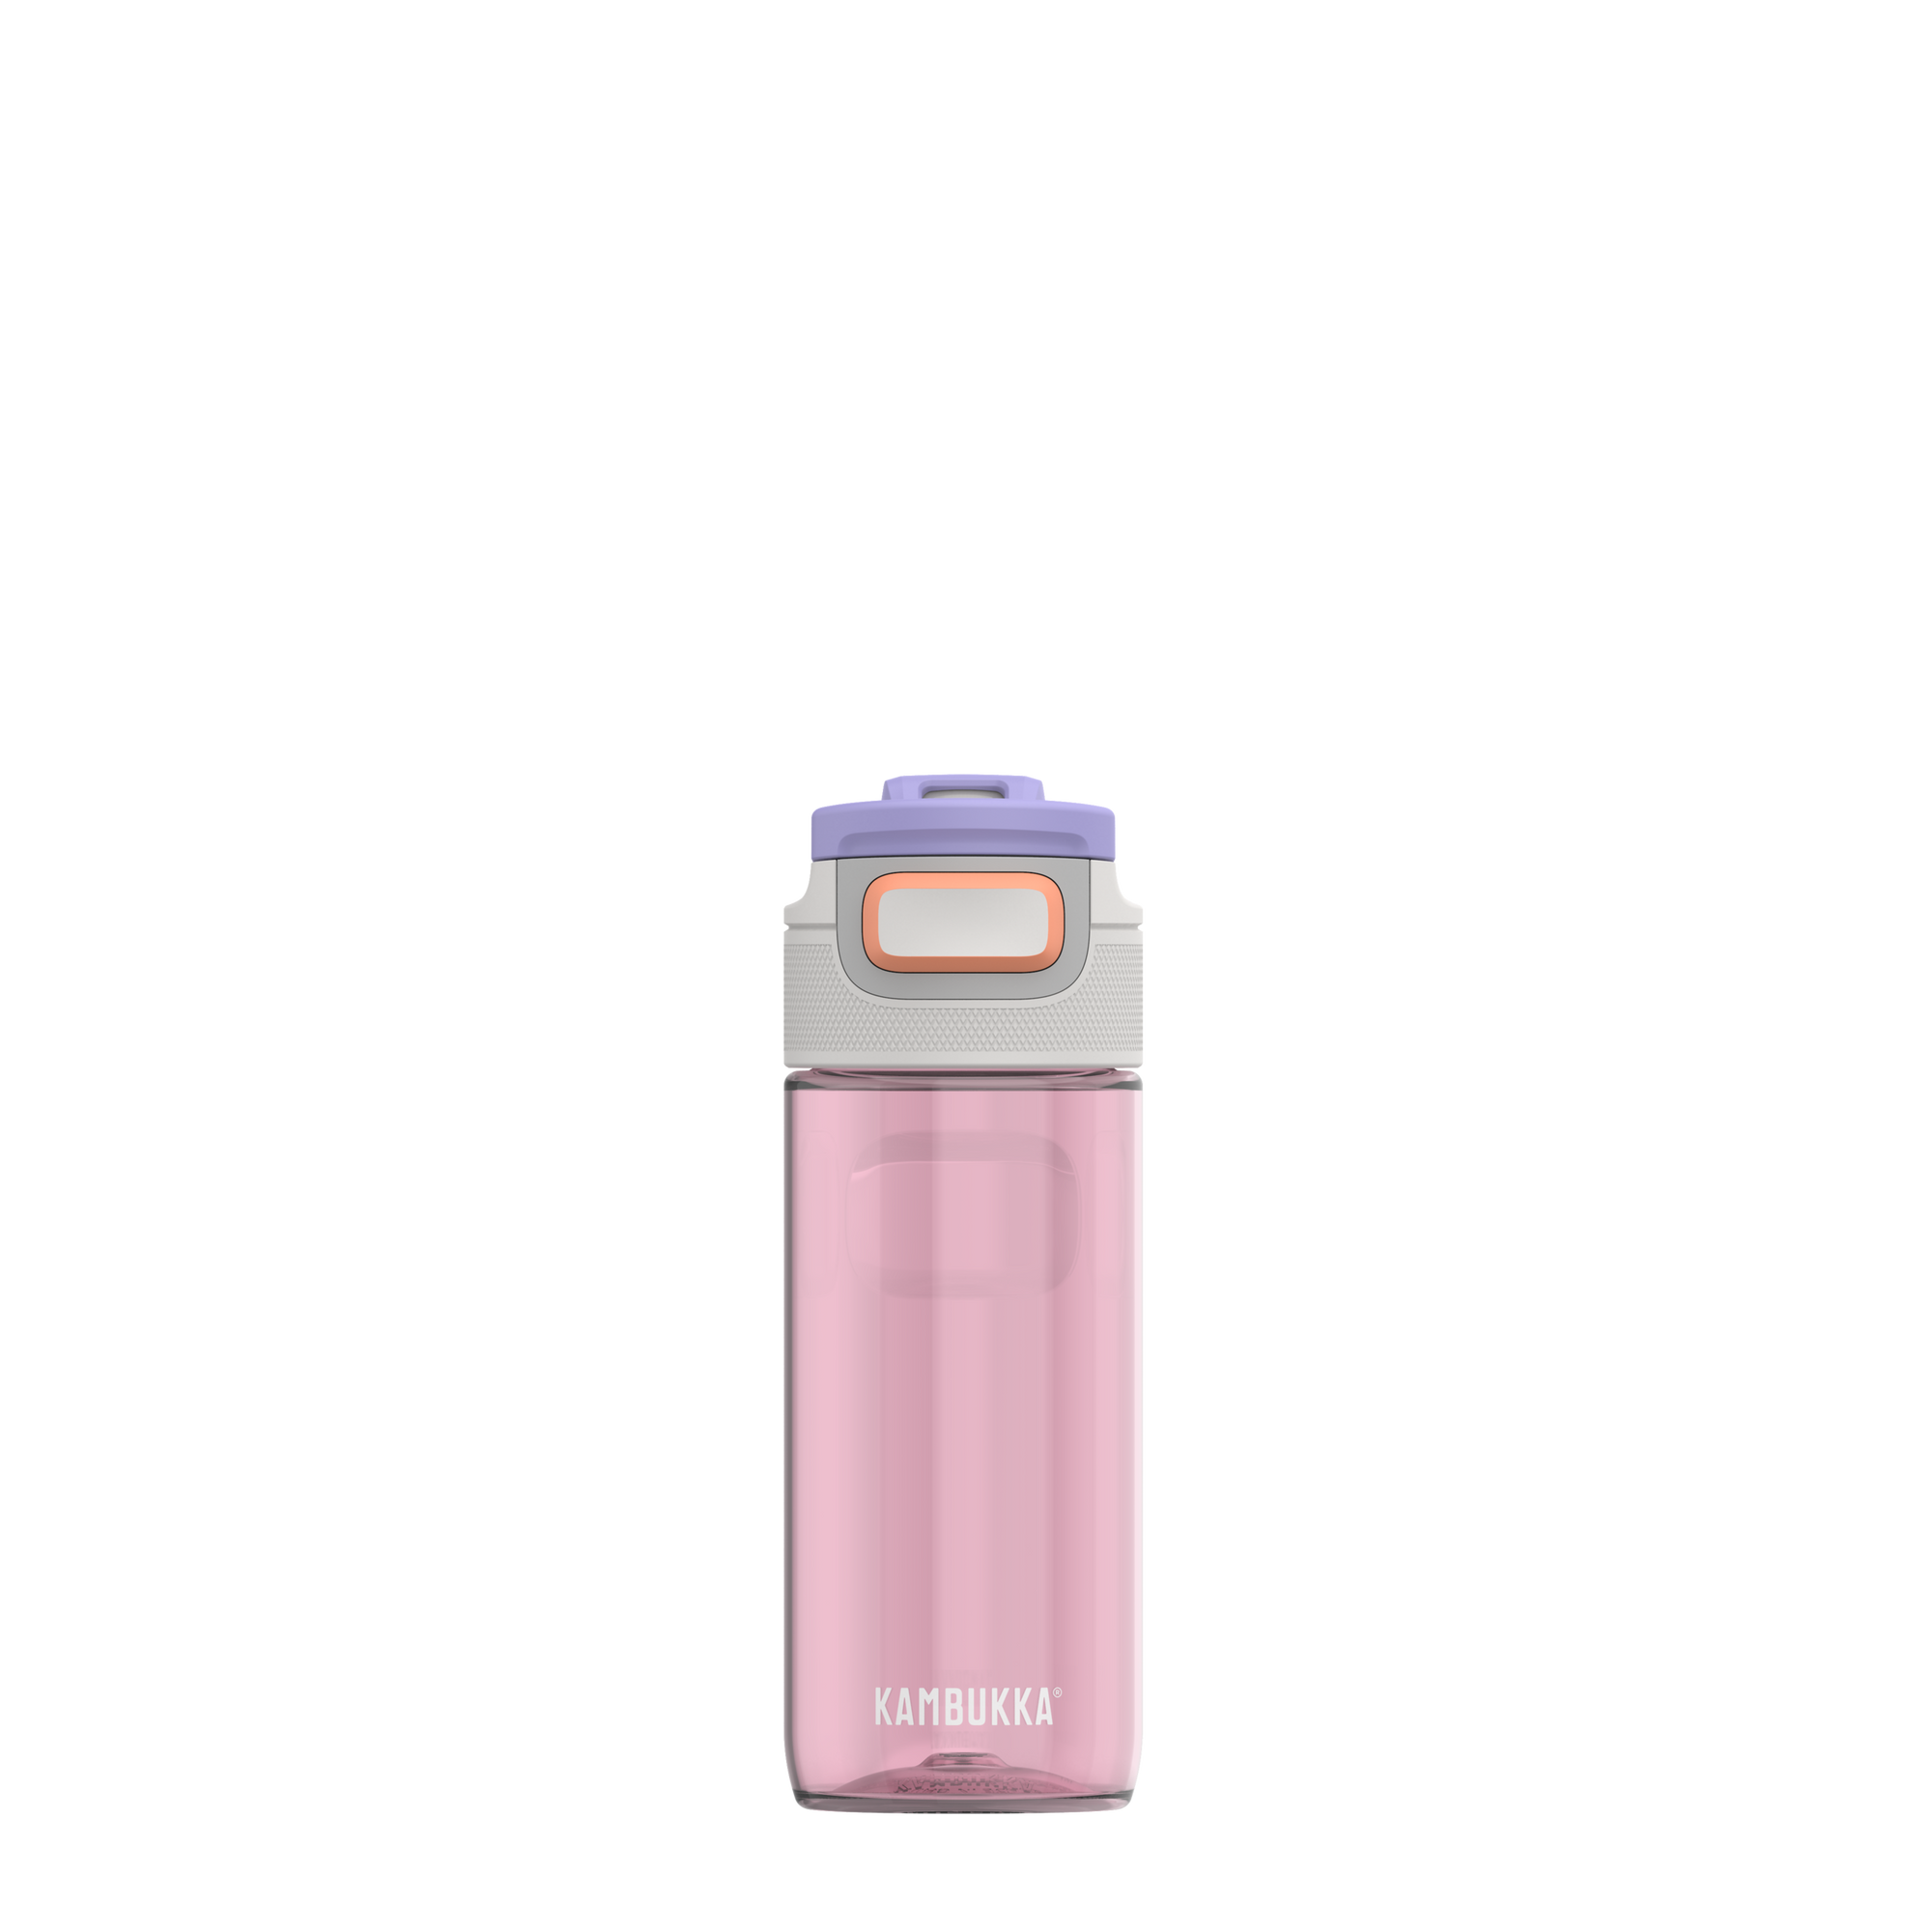 Kambukka-Elton 500ml-Water Bottle-Barely Brush-Gearaholic.com.sg